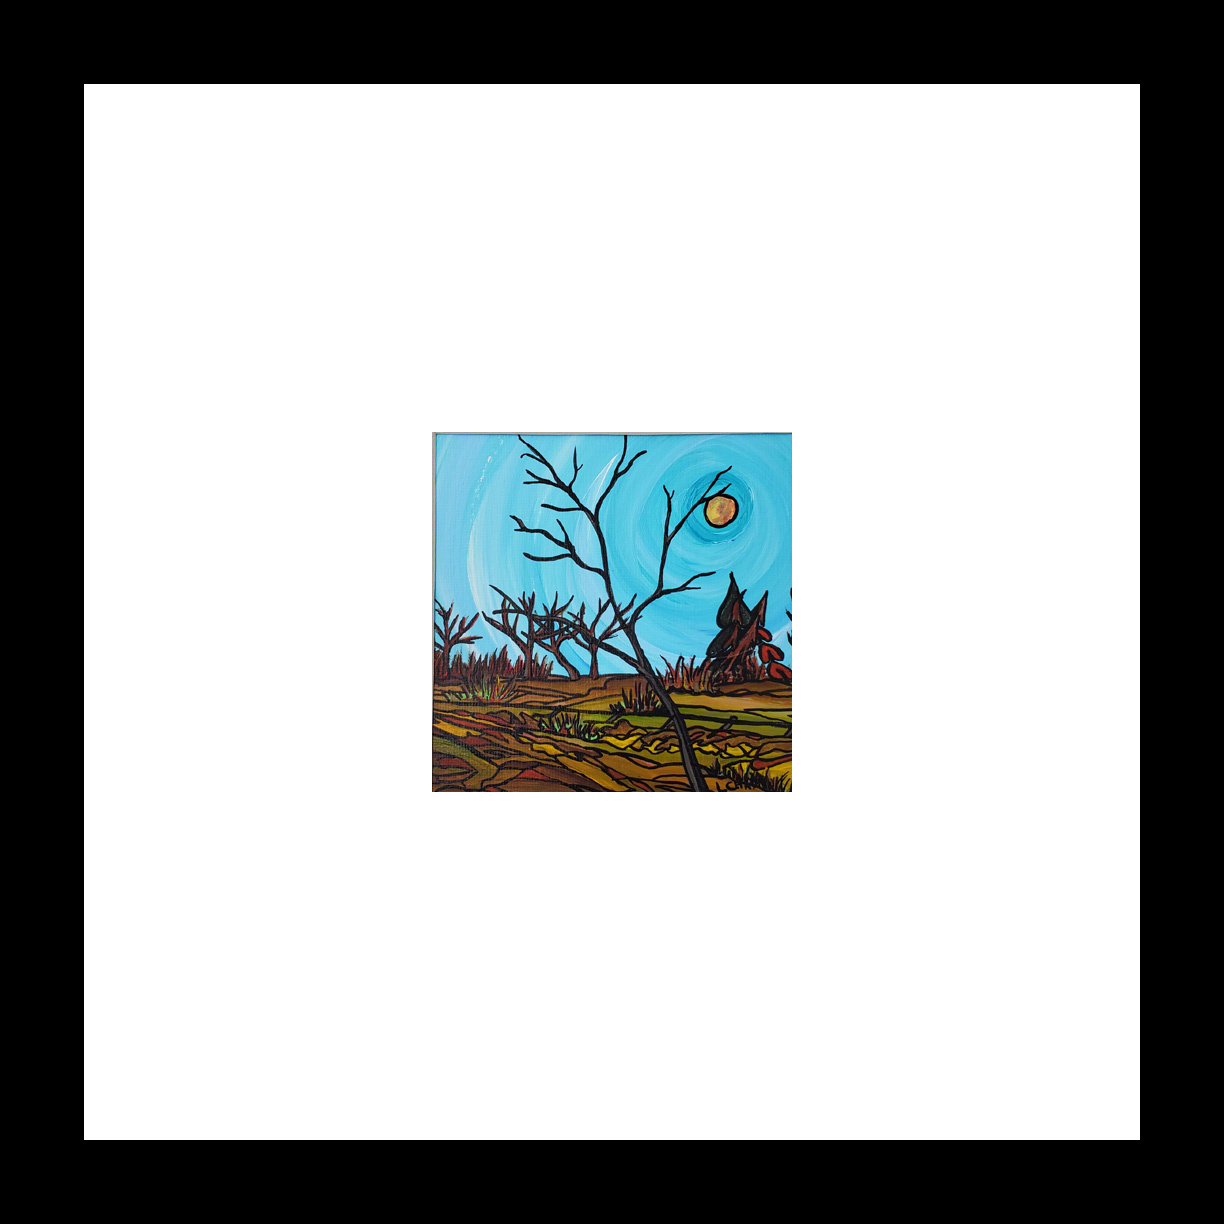 2019-21 "Prairie South Fall"
Image: 5" x 5"
Framed: 12" x 12"
Acrylic on 246 lb paper
$125.00

